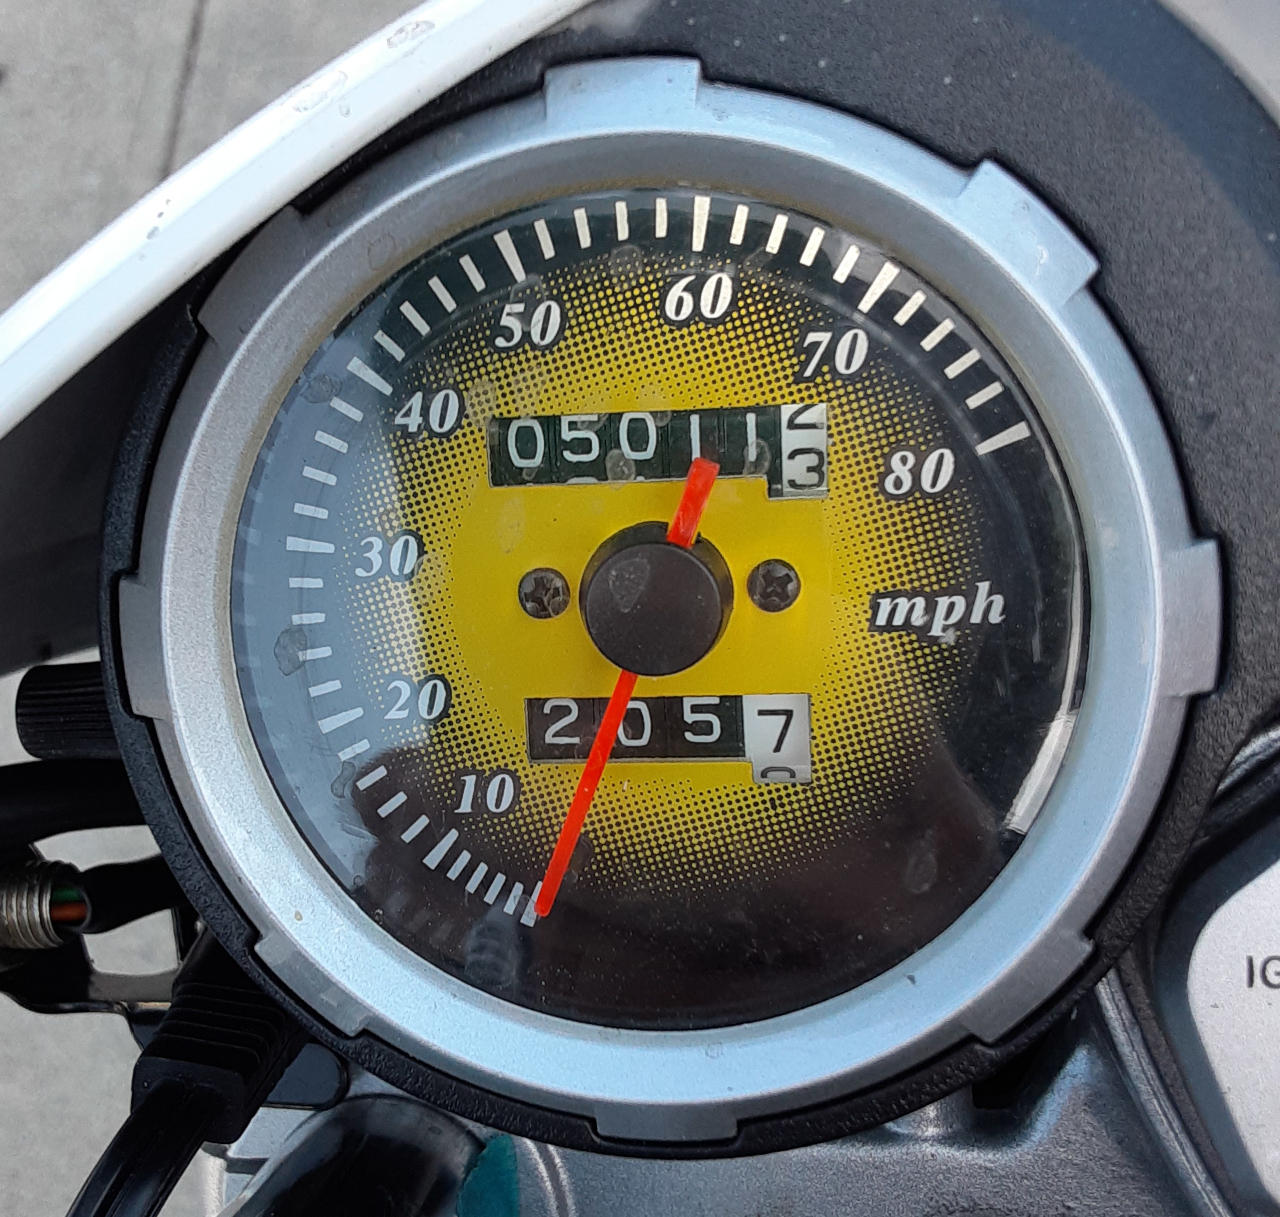 TaoTao TBR7 Motorcycle speedometer and odometer.